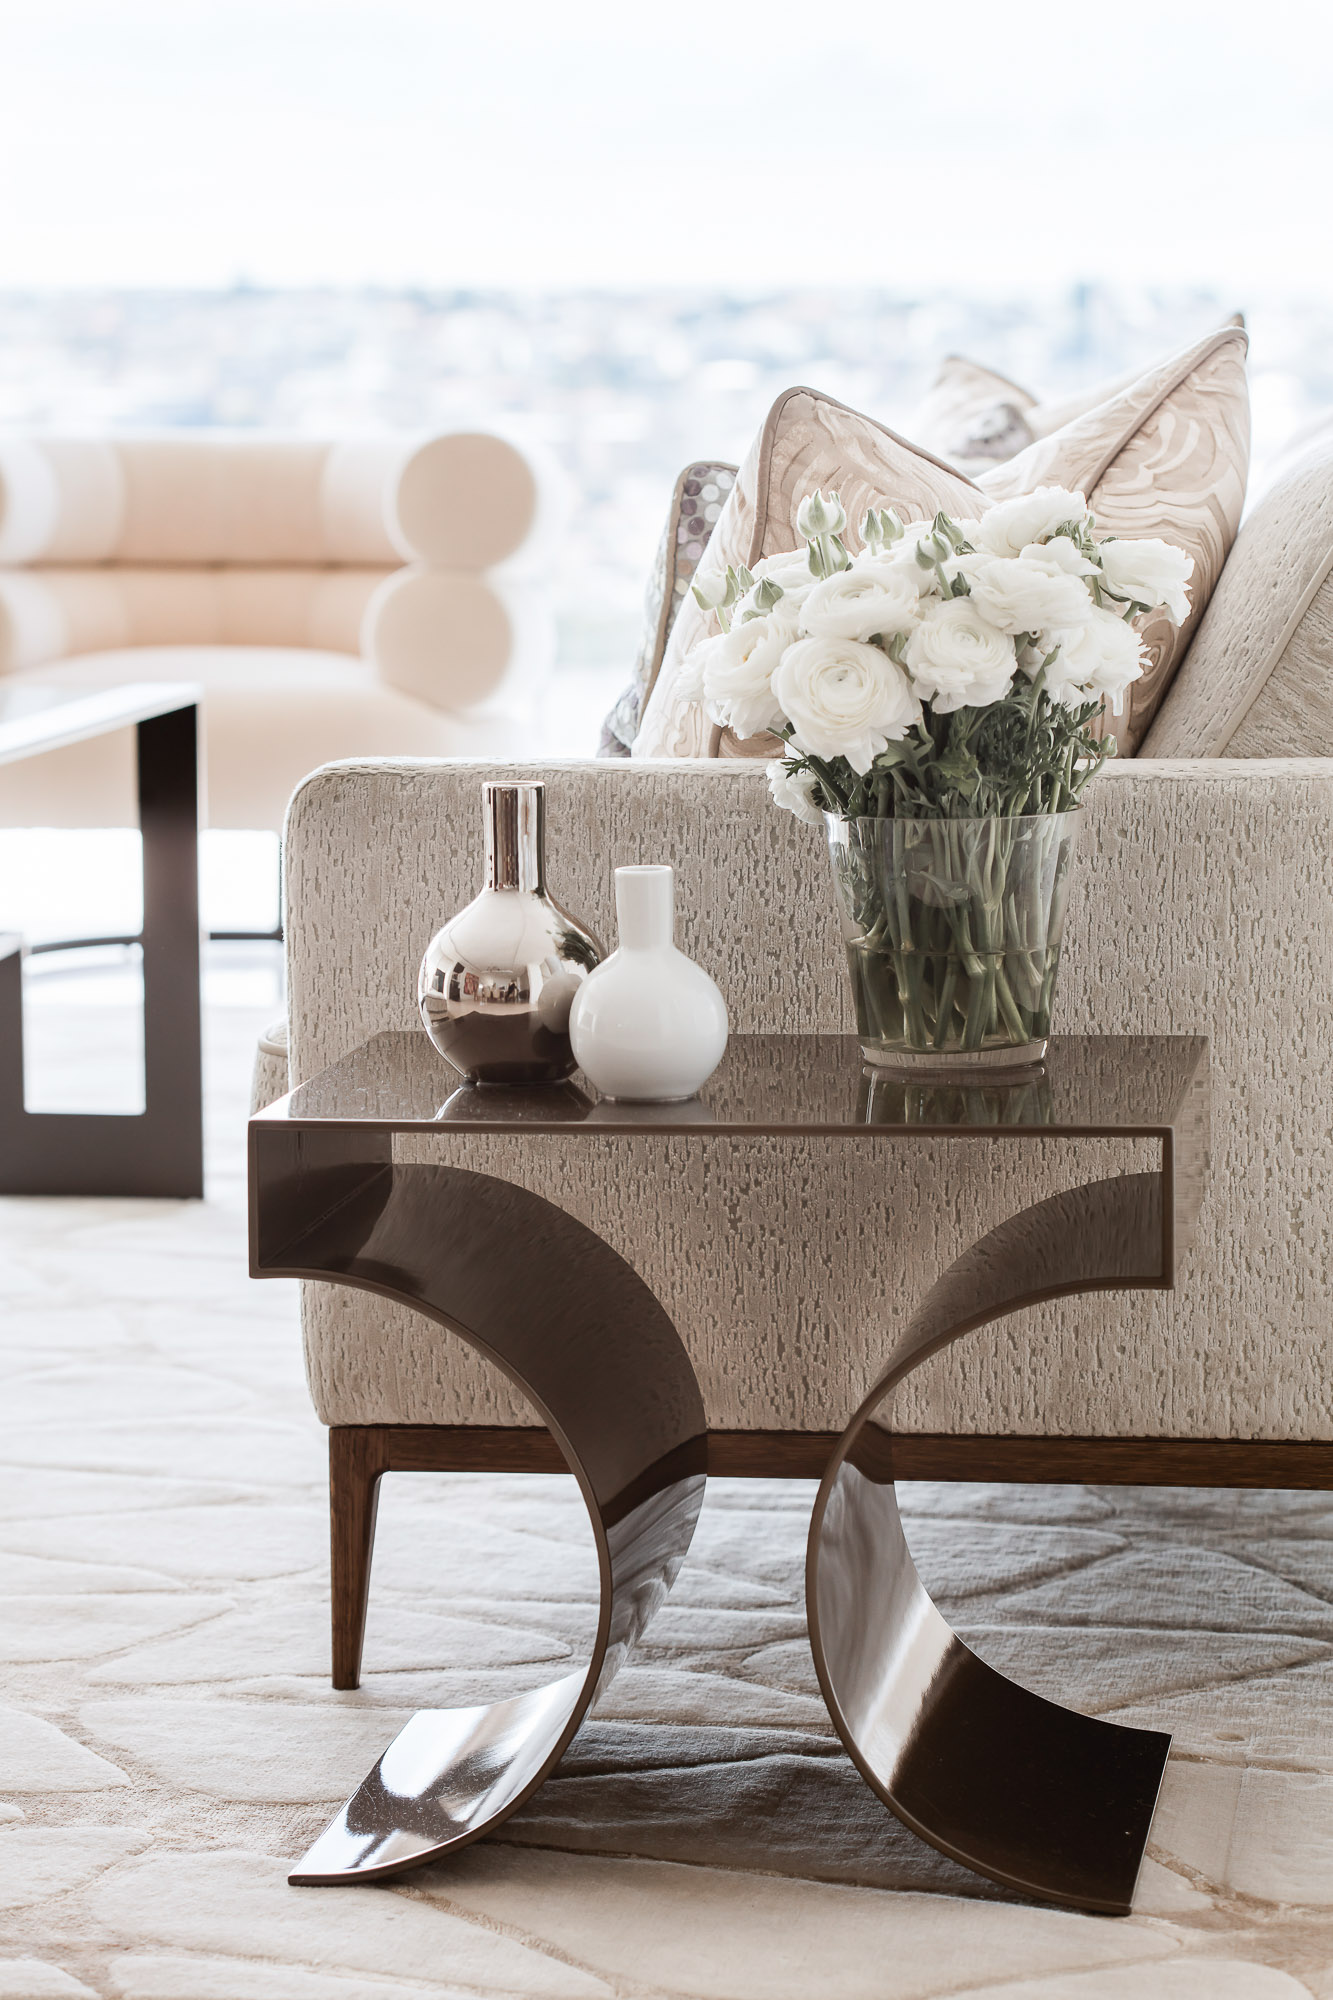 Side table decoration with floral vase on bronze metal side table, by Sydney interior designers, Brendan Wong Design